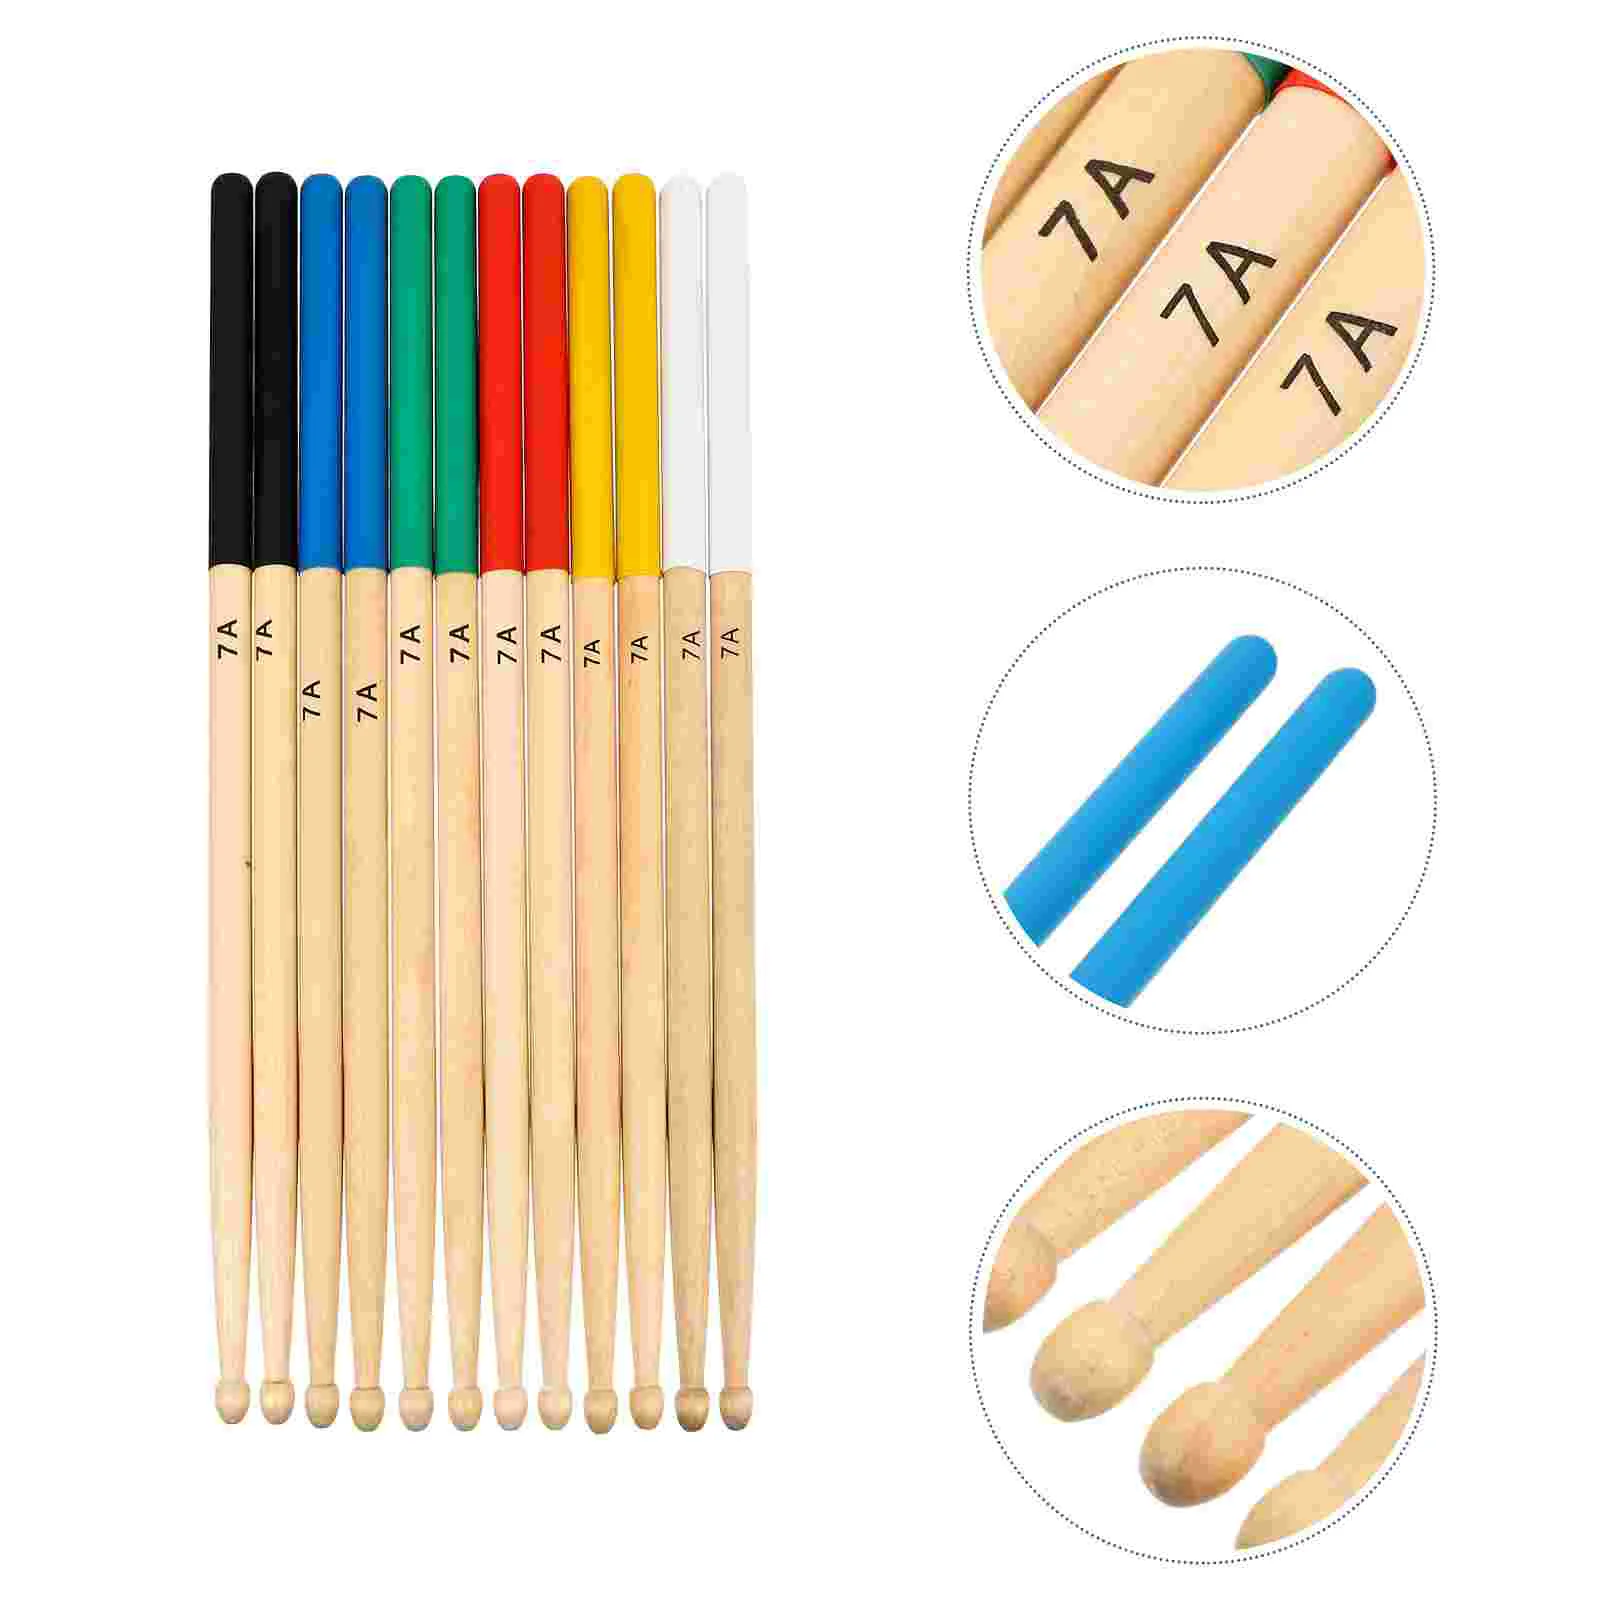 

6 Pairs Drum Stick Professional Sticks Percussion Drumsticks Major Wood Maple Hammer